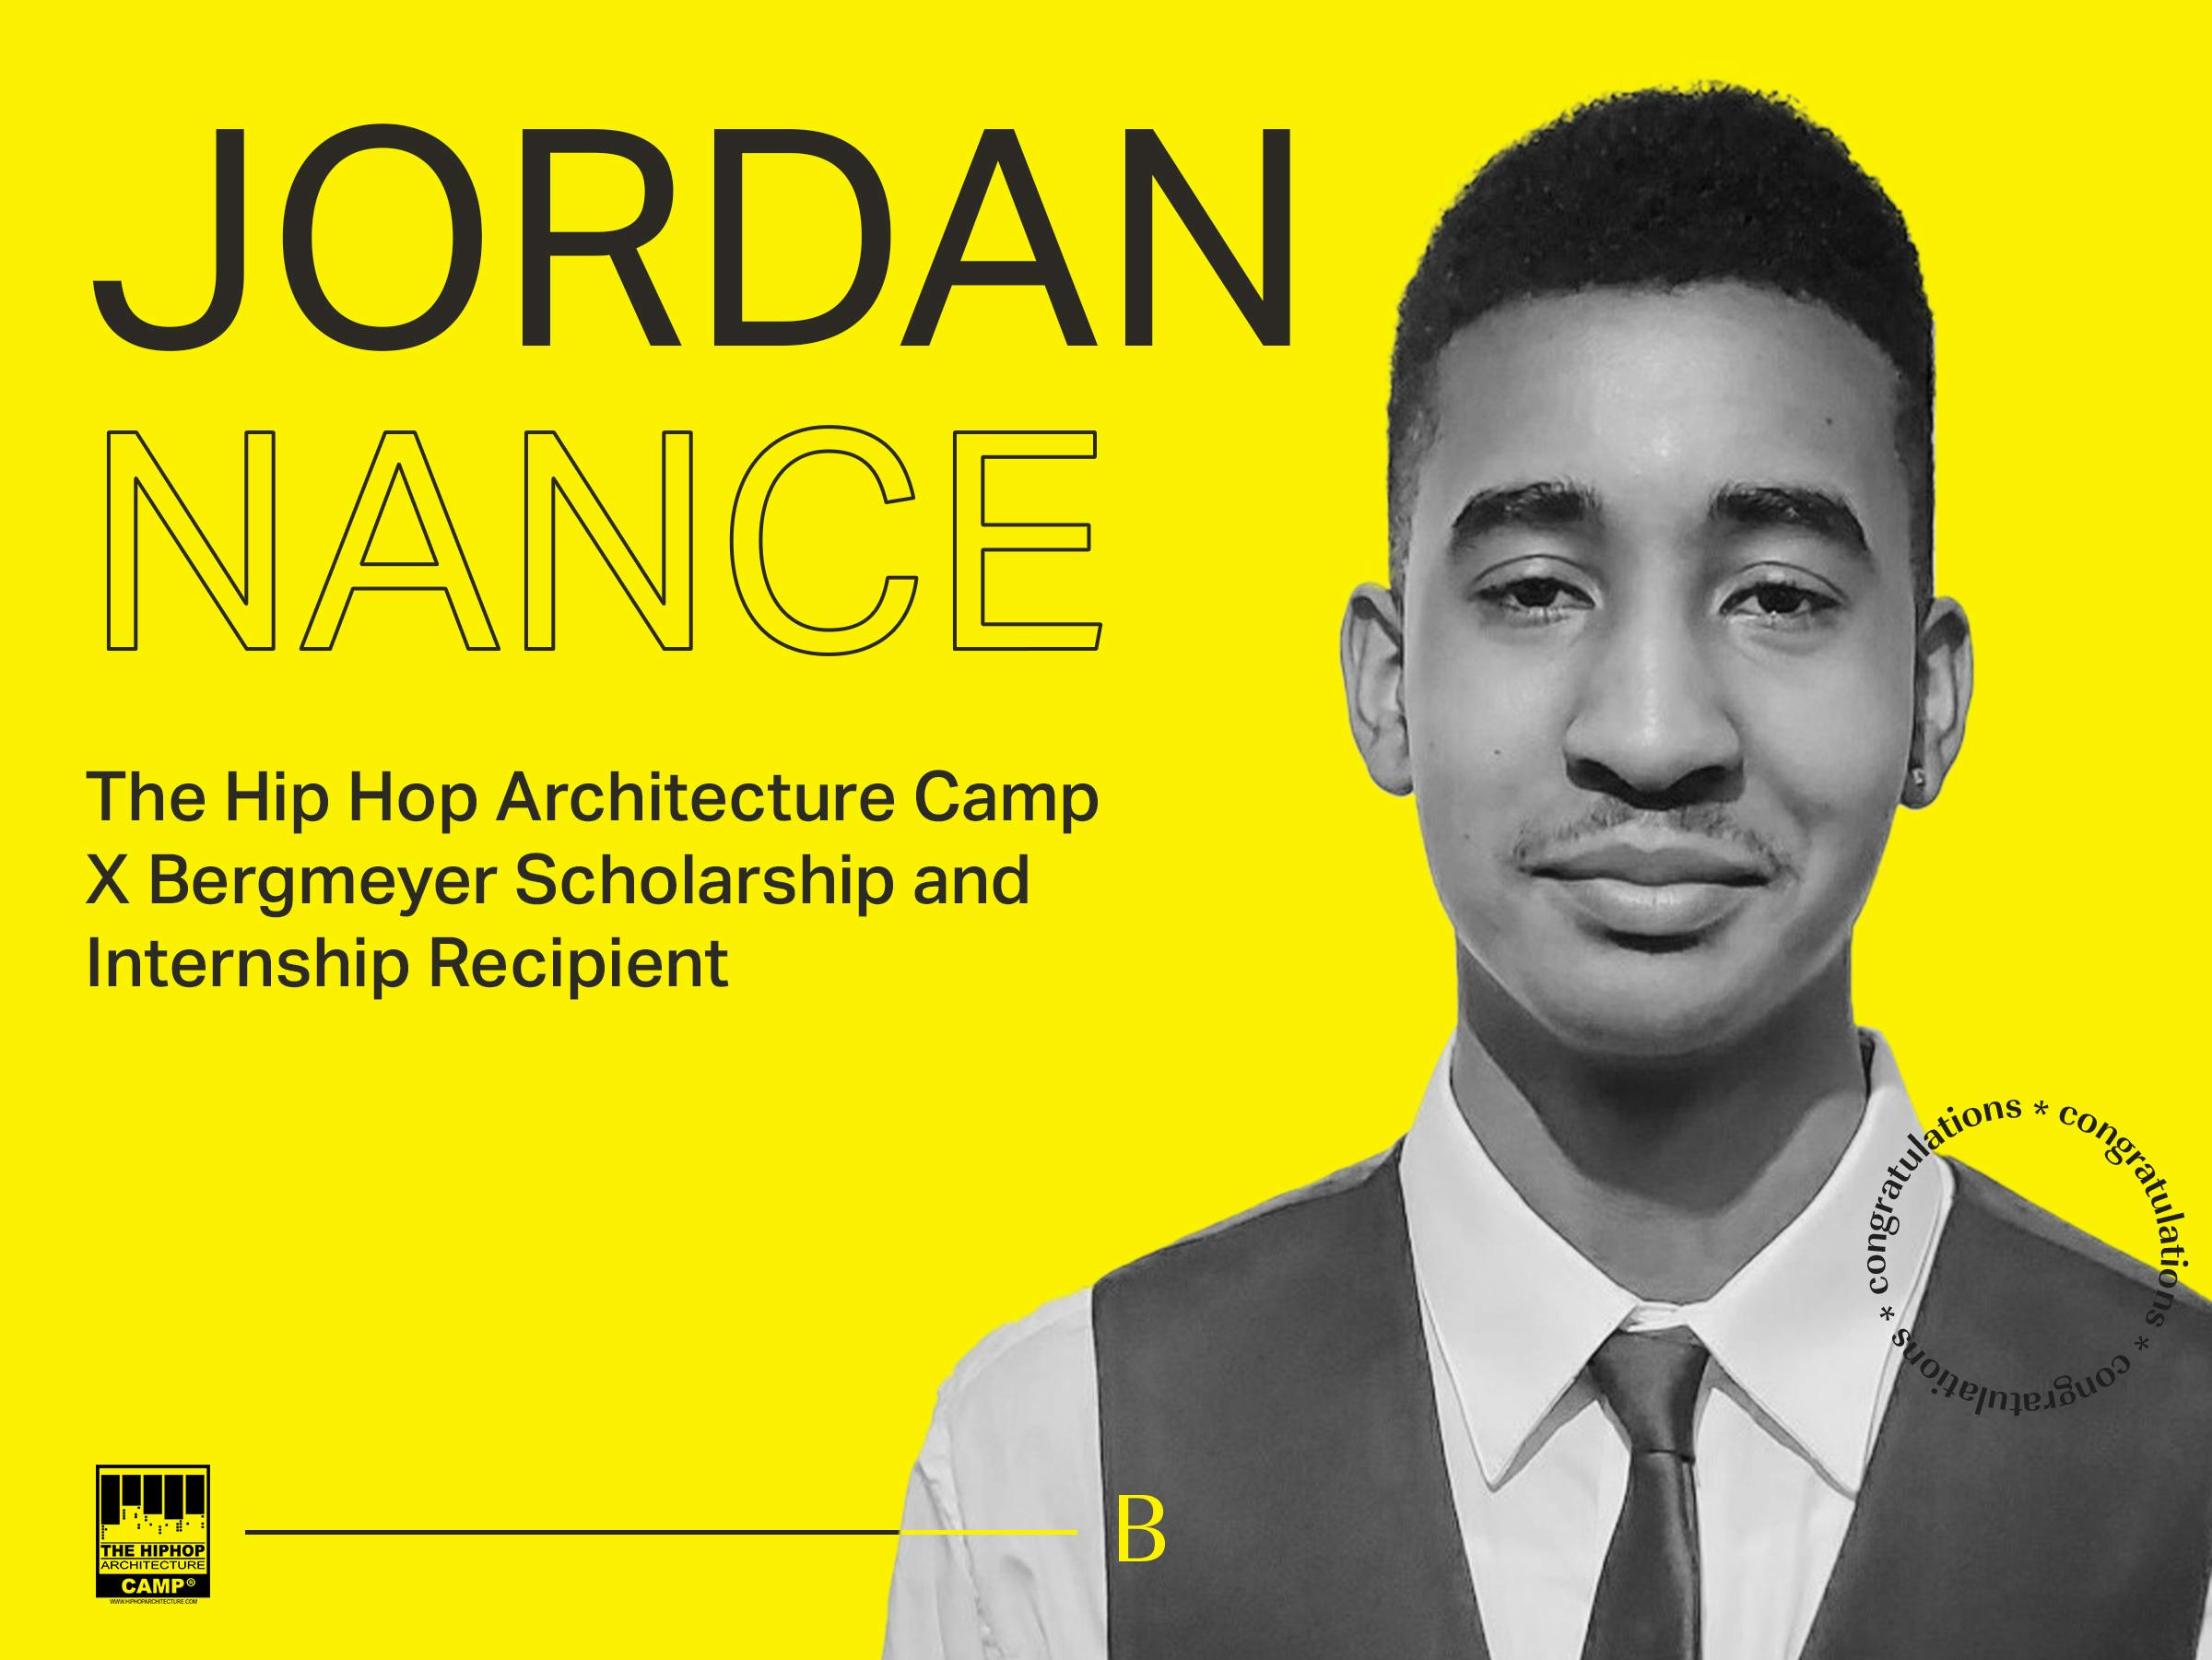 Congrats to Jordan Nance, the recipient of the Hip Hop Architecture Camp x Bergmeyer Scholarship and Internship program!